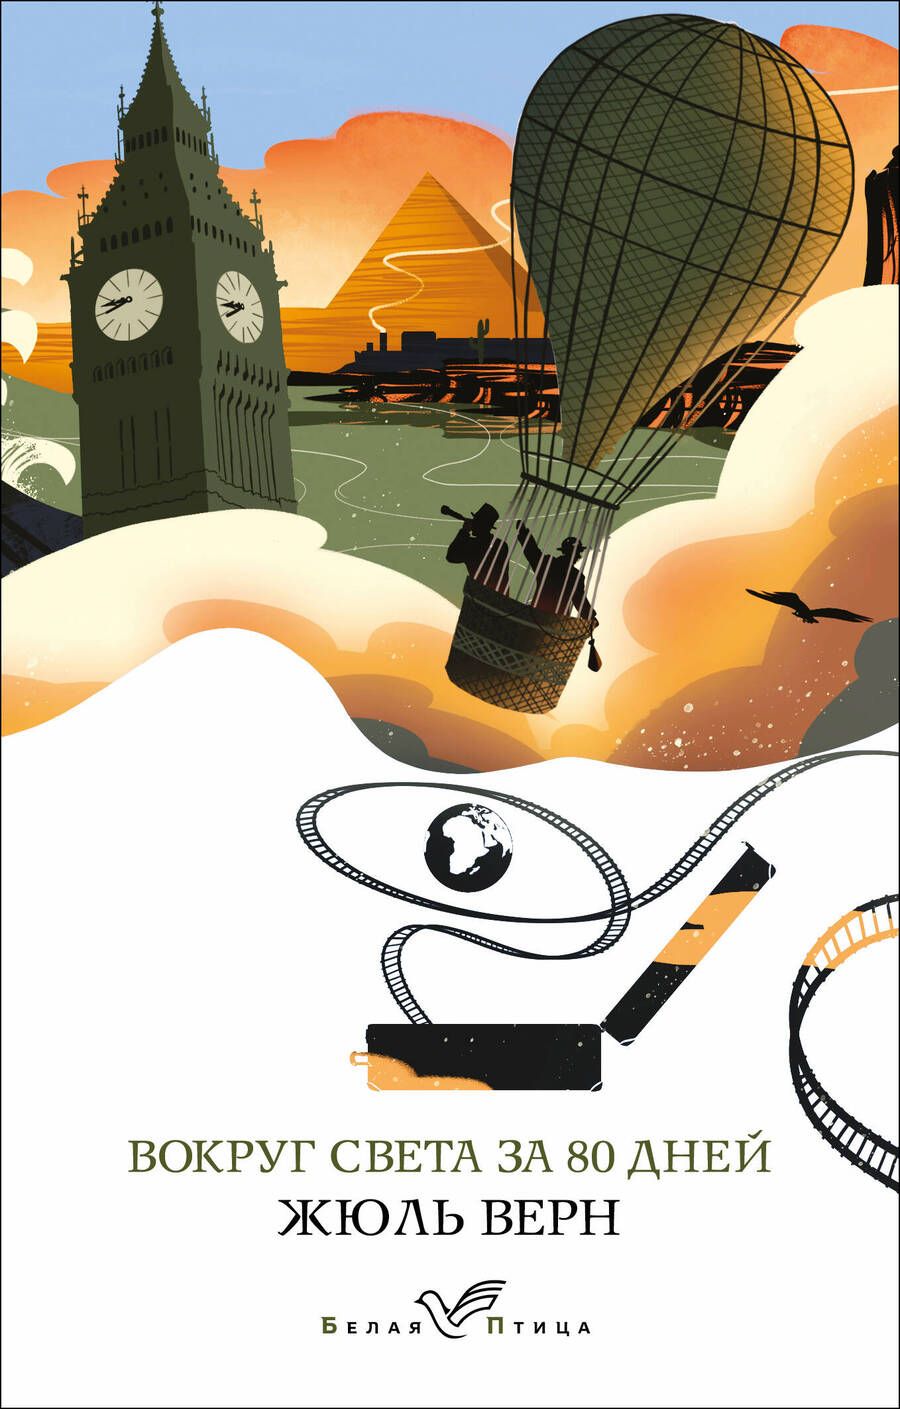 Обложка книги "Верн: Вокруг света за 80 дней"